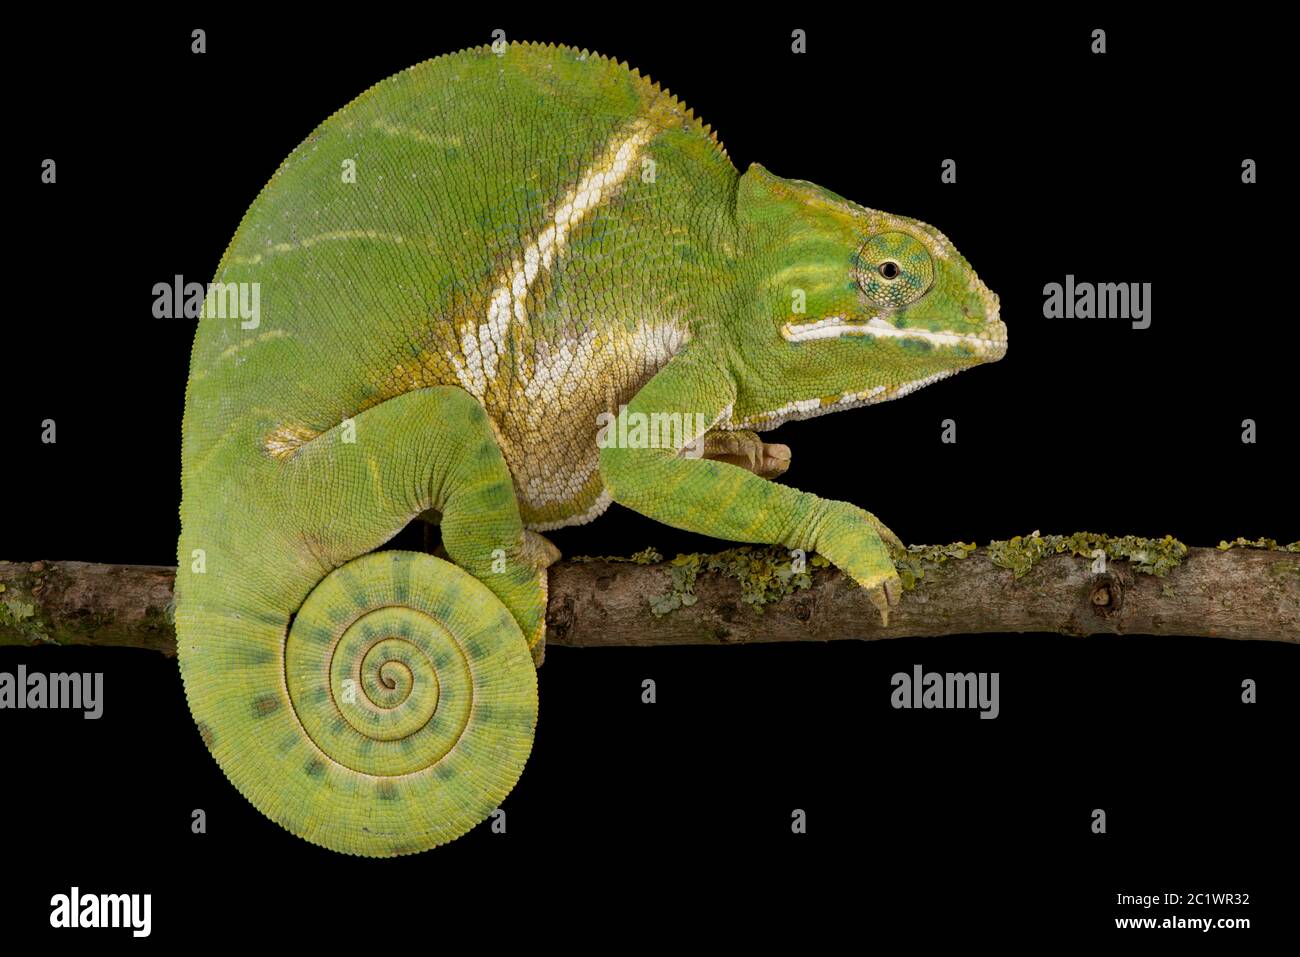 Two-banded chameleon (Furcifer balteatus) Stock Photo